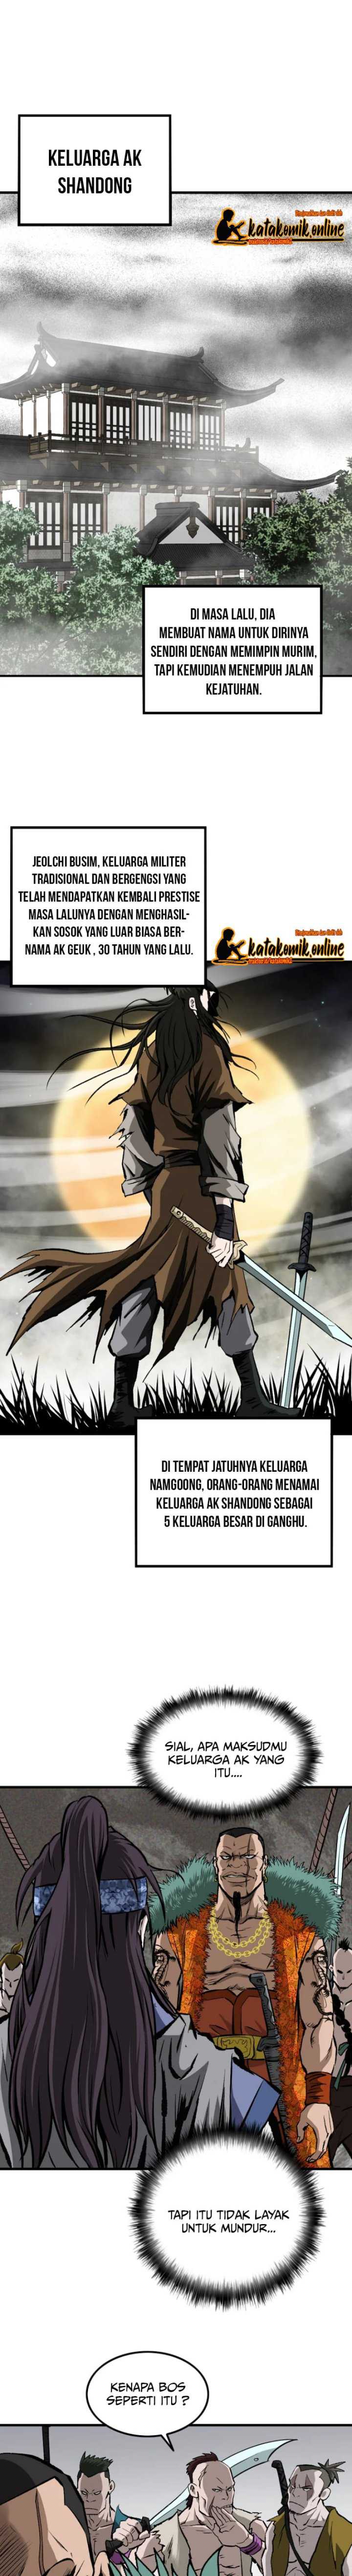 Archer Sword God : Descendants of the Archer Chapter 03